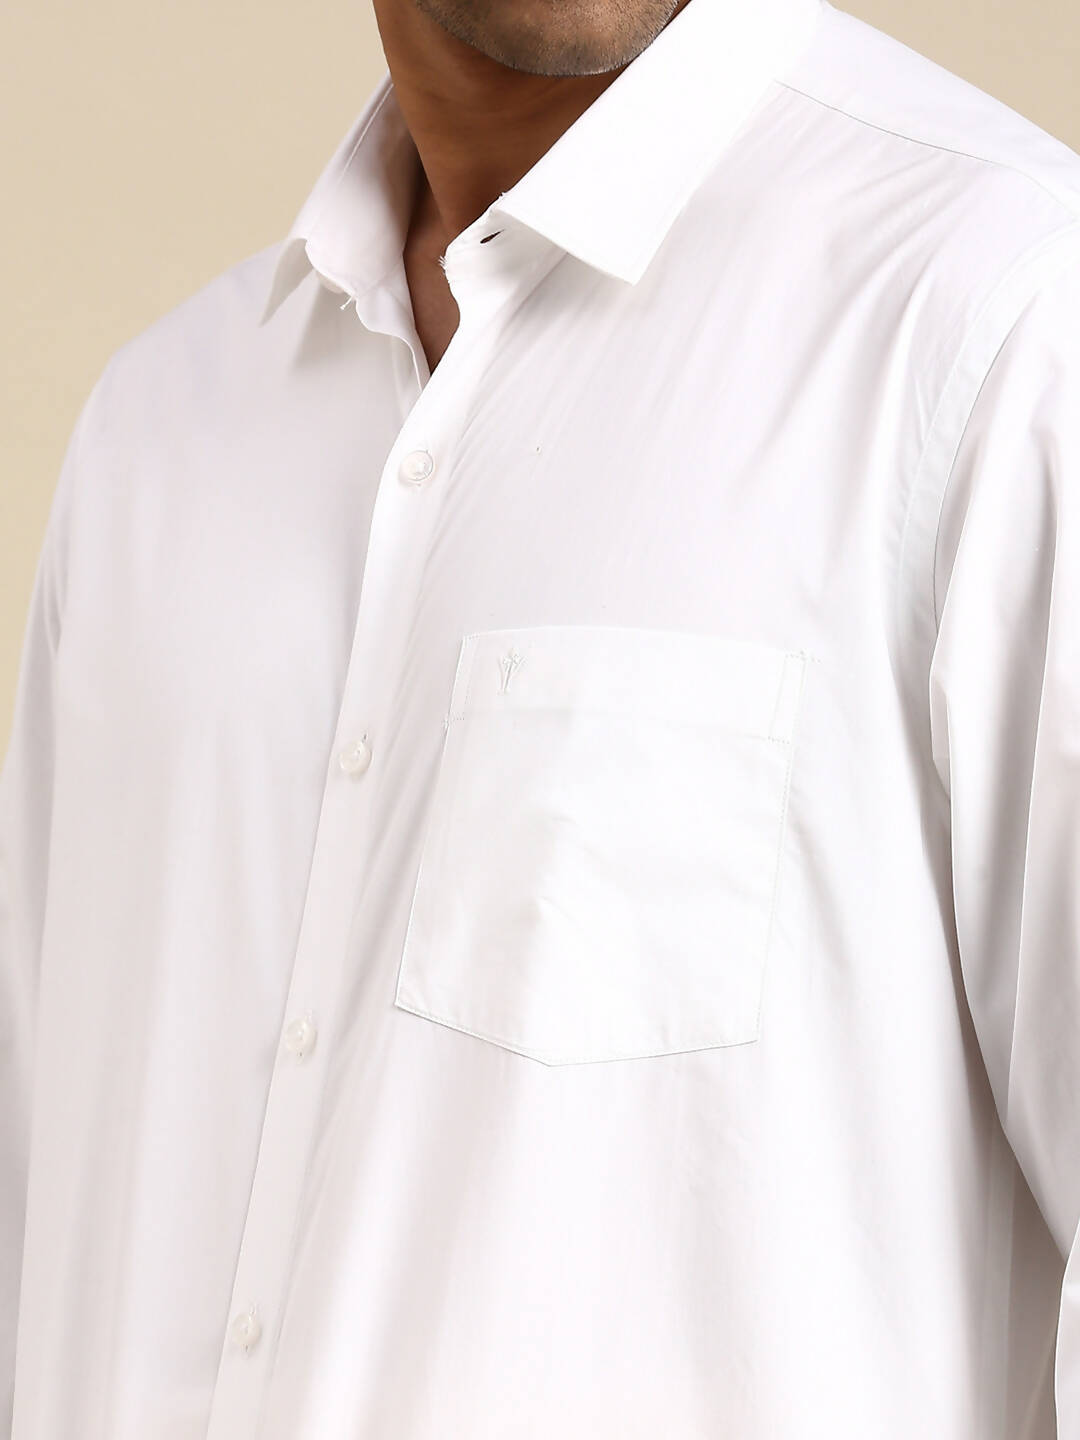 Ramraj Cotton Men Vest - Buy Ramraj Cotton Men Vest Online at Best